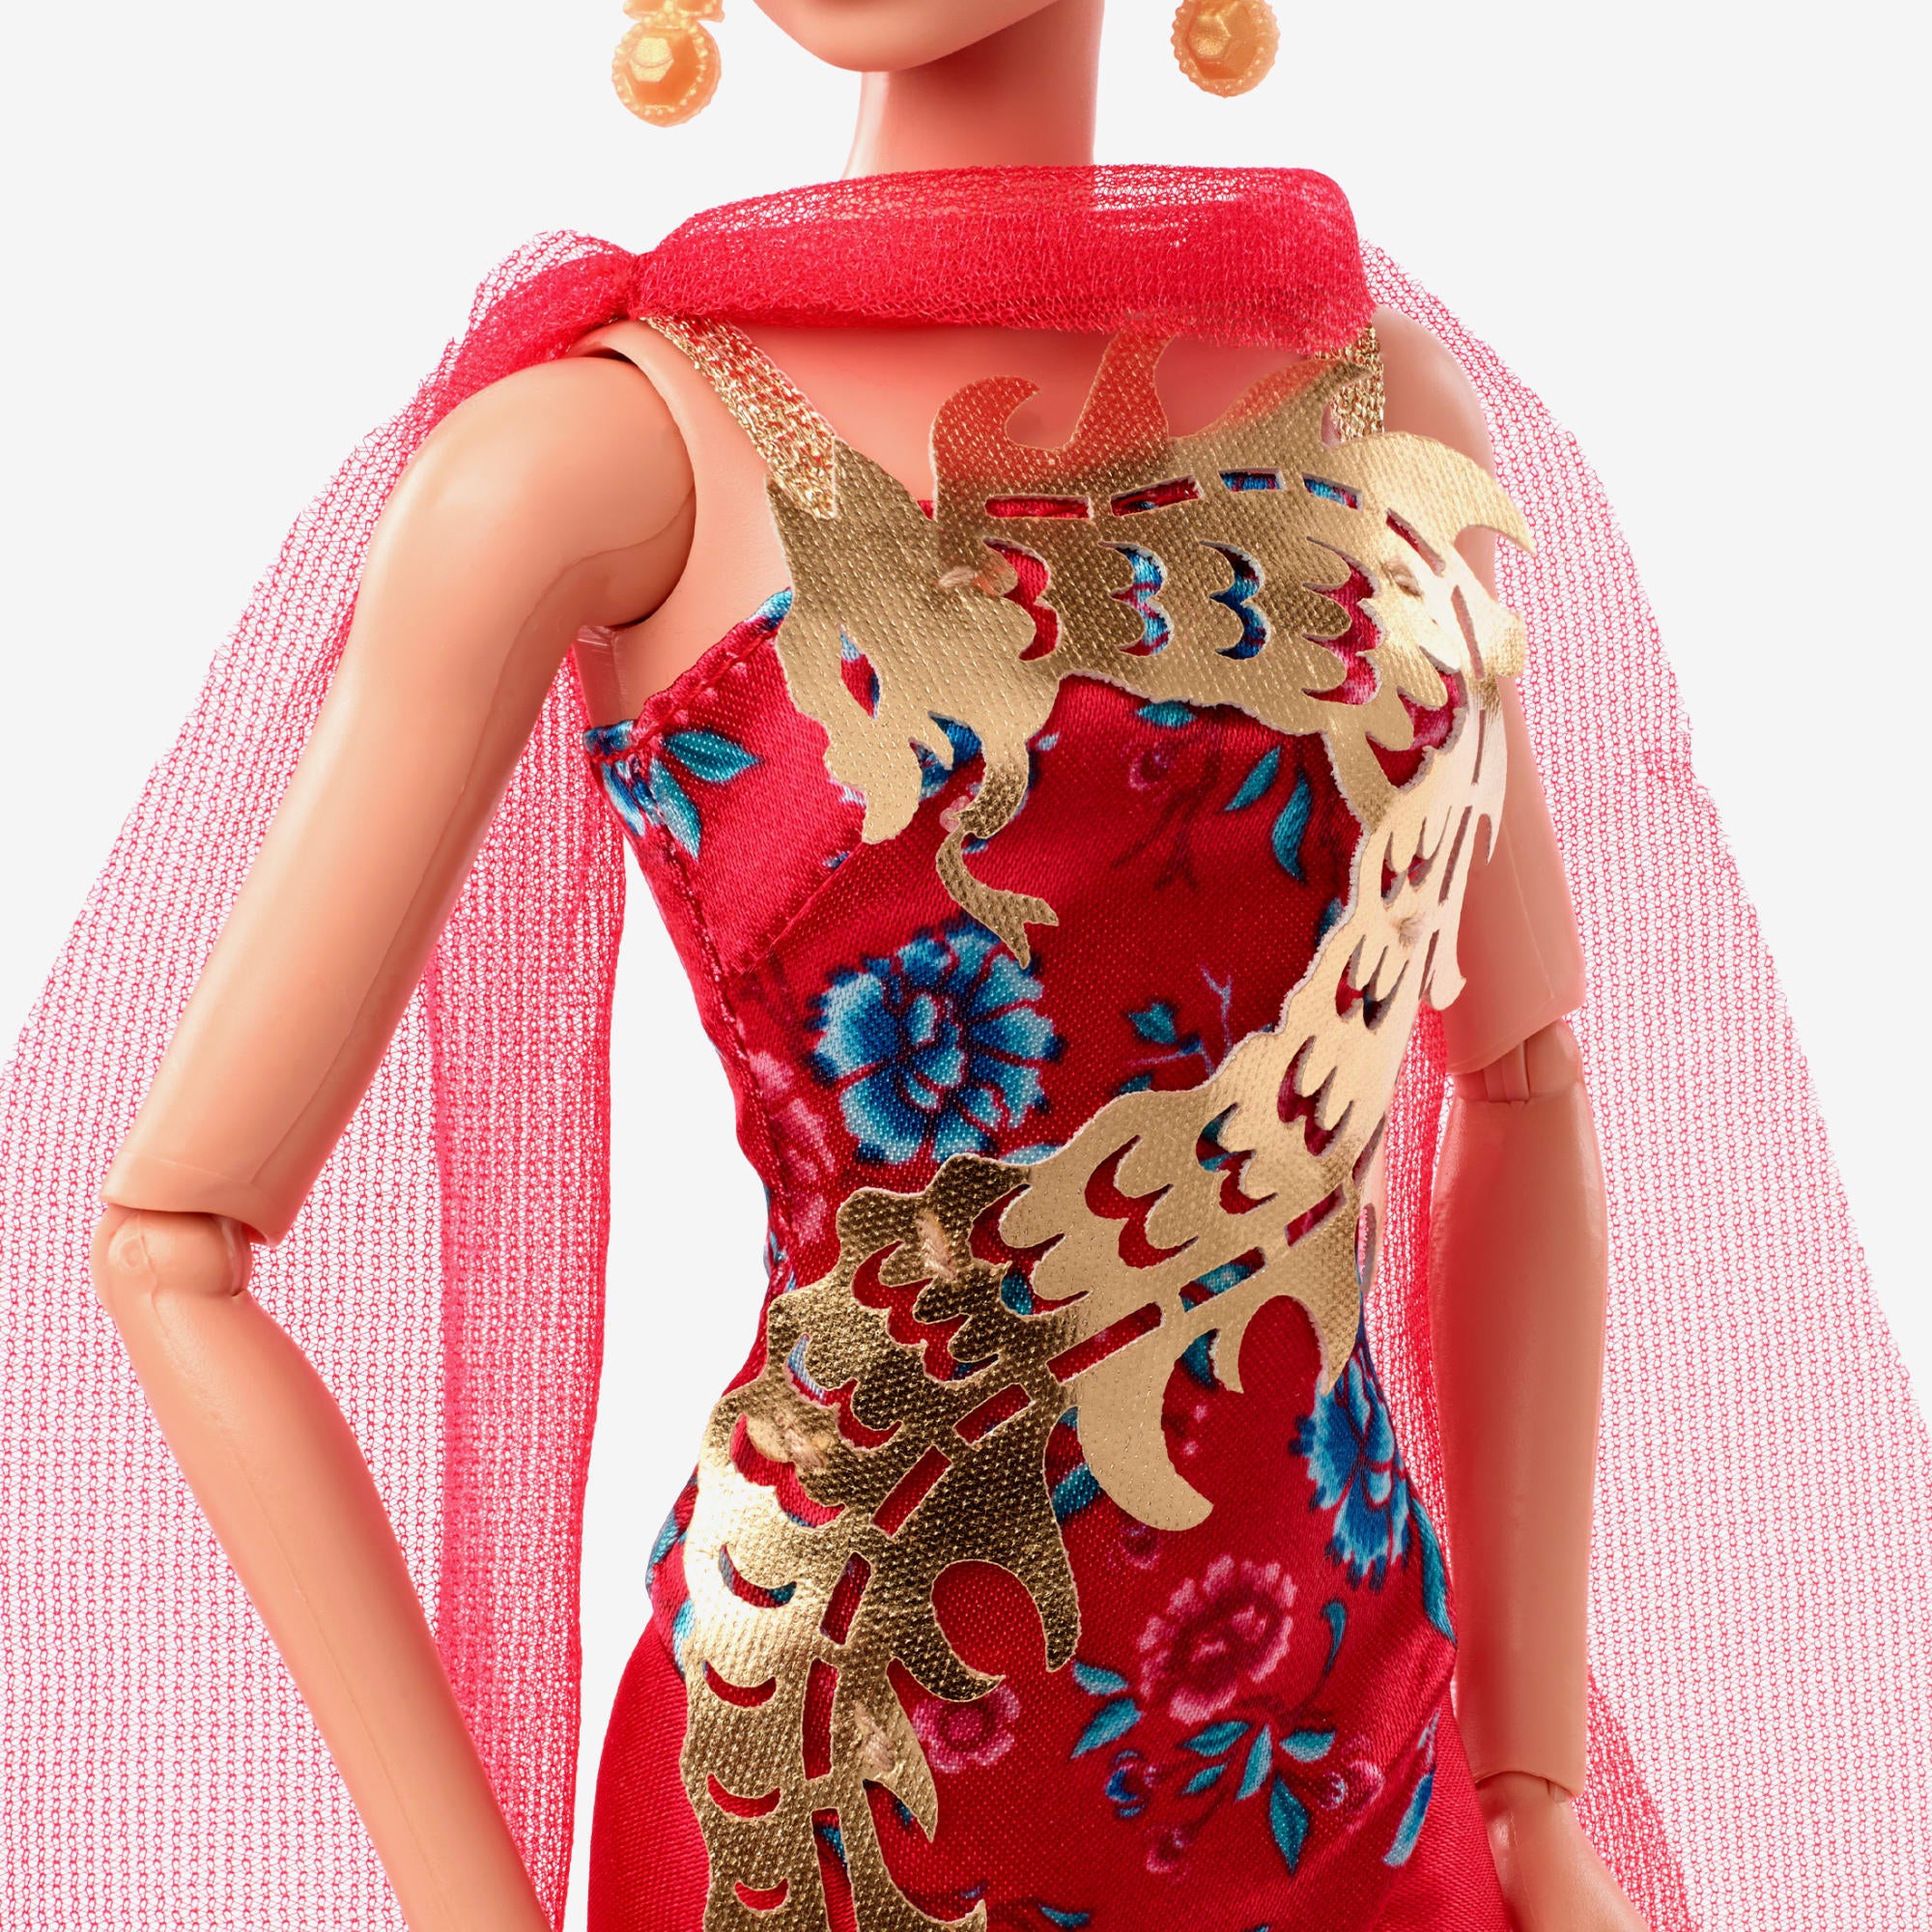 Barbie Inspiring Women Anna May Wong Doll